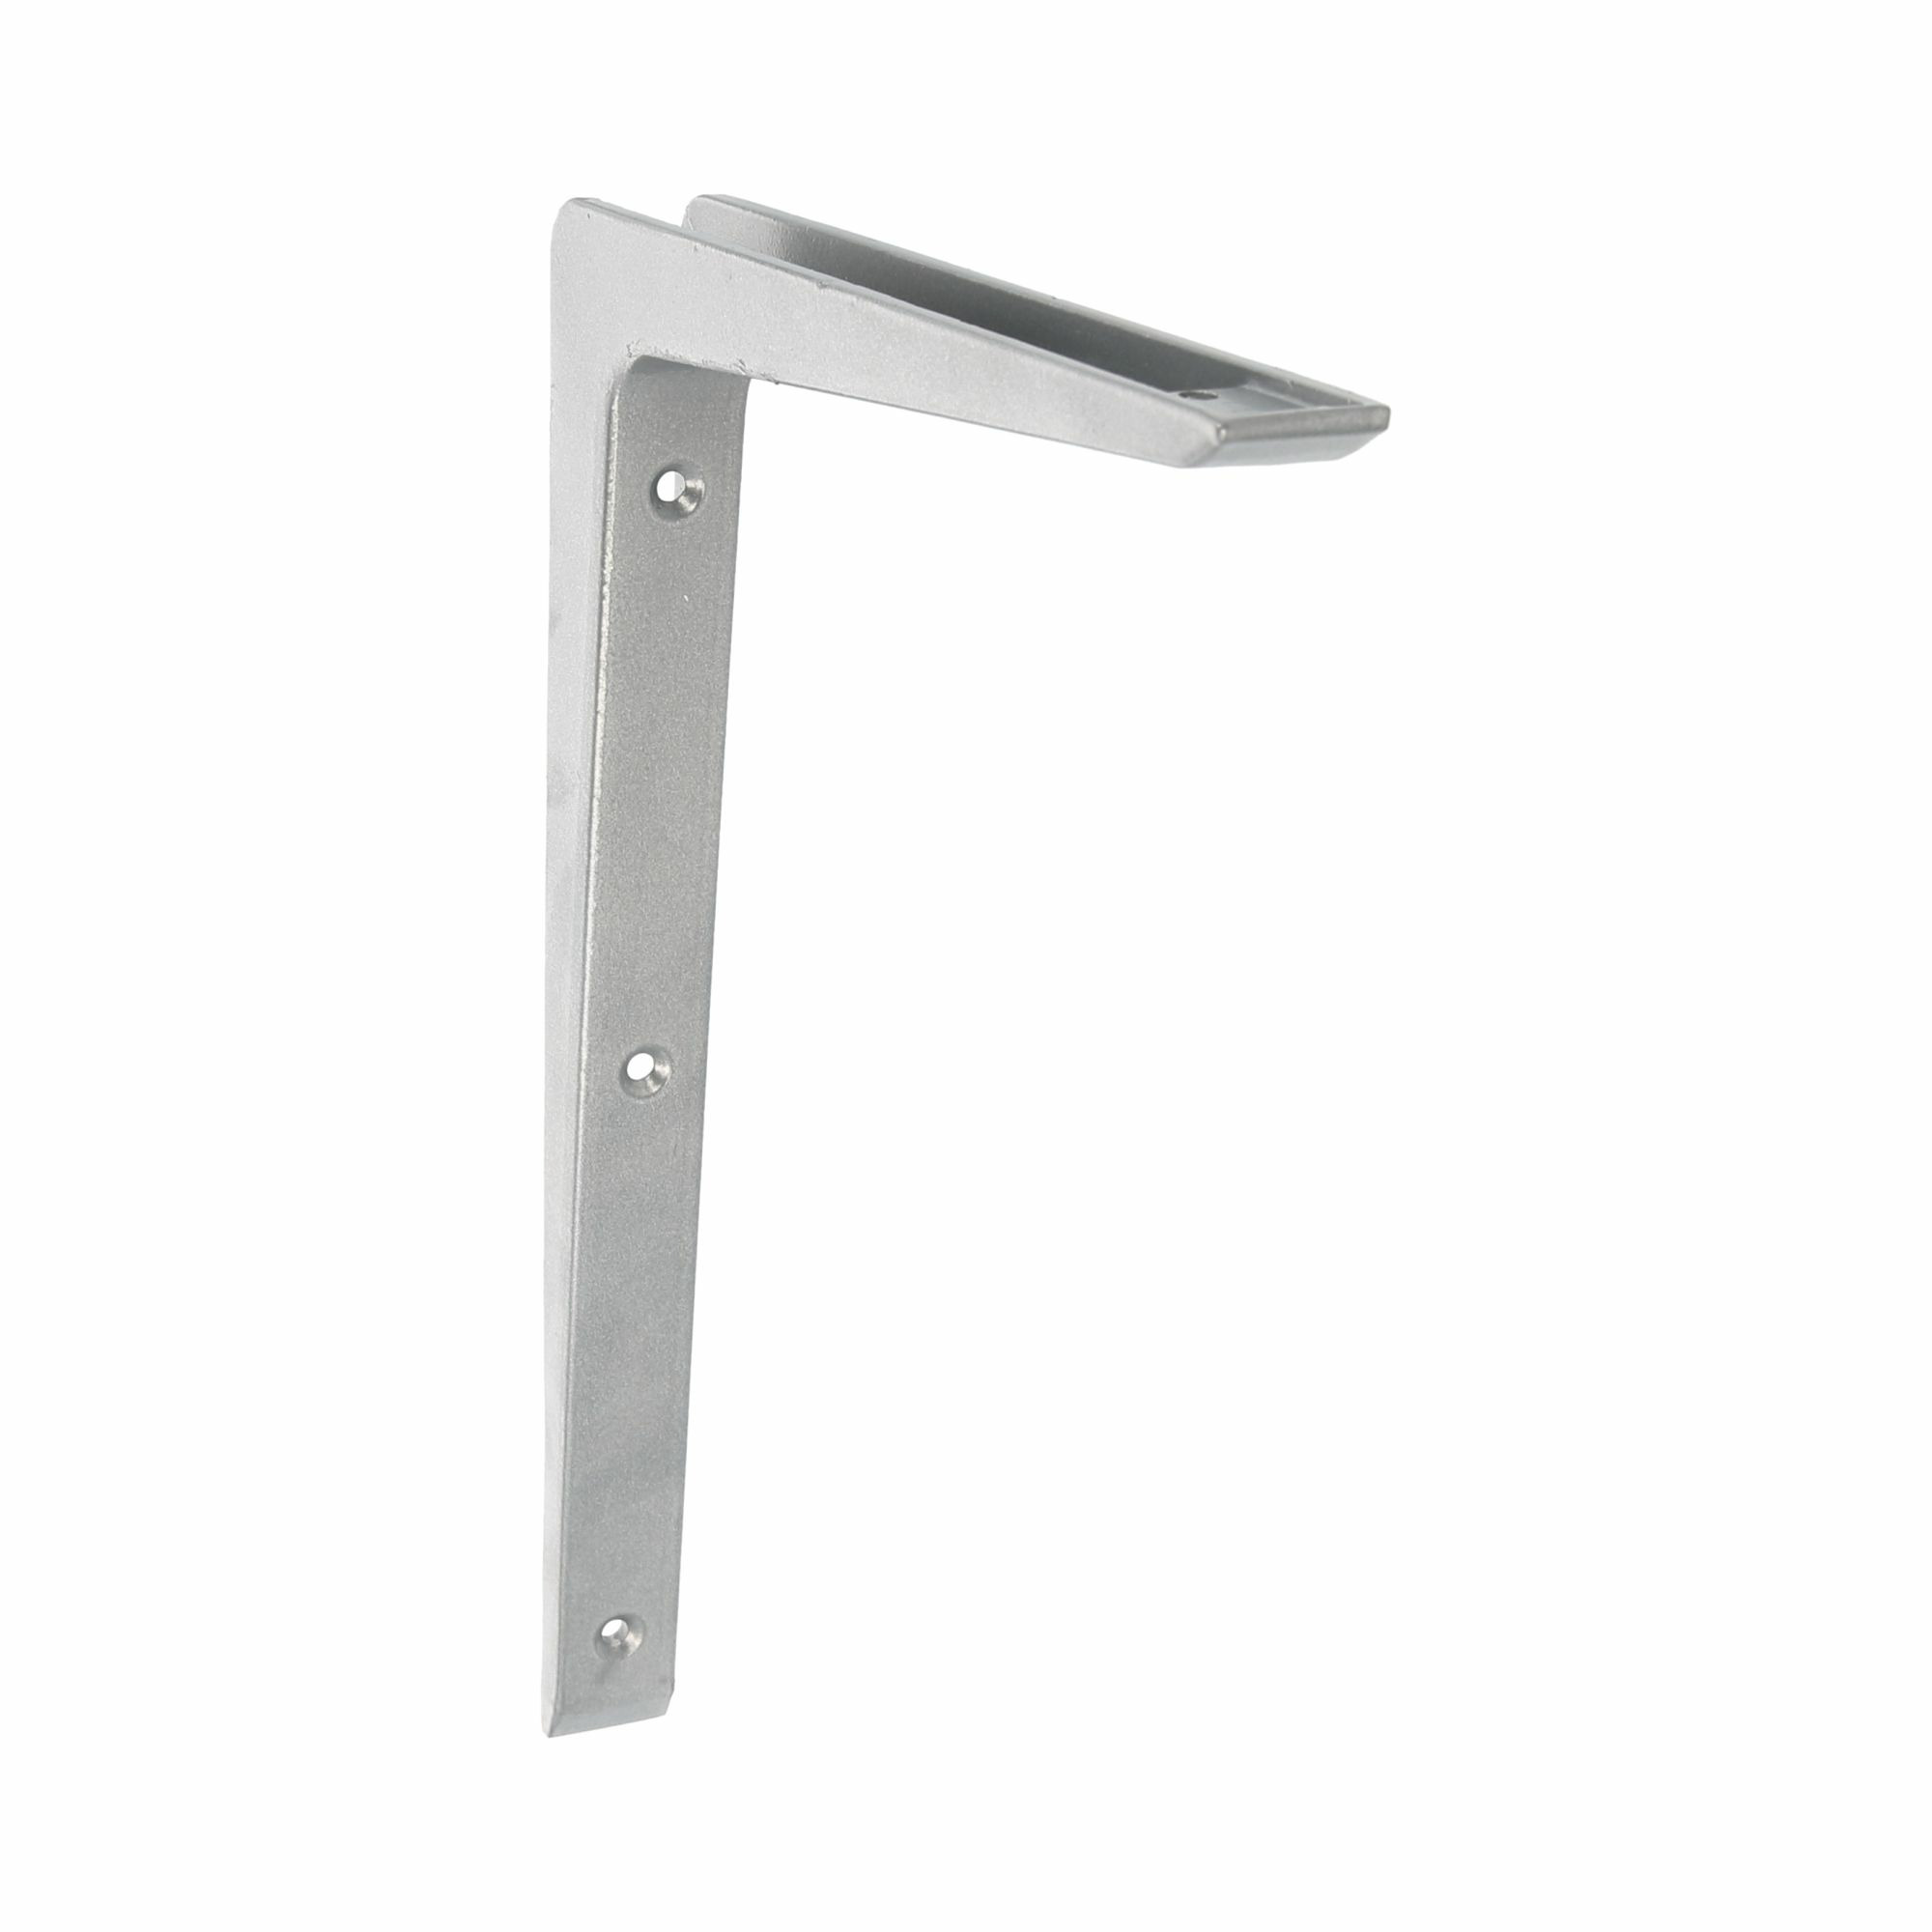 AMIG Plankdrager-planksteun van aluminium gelakt zilvergrijs H250 x B200 mm